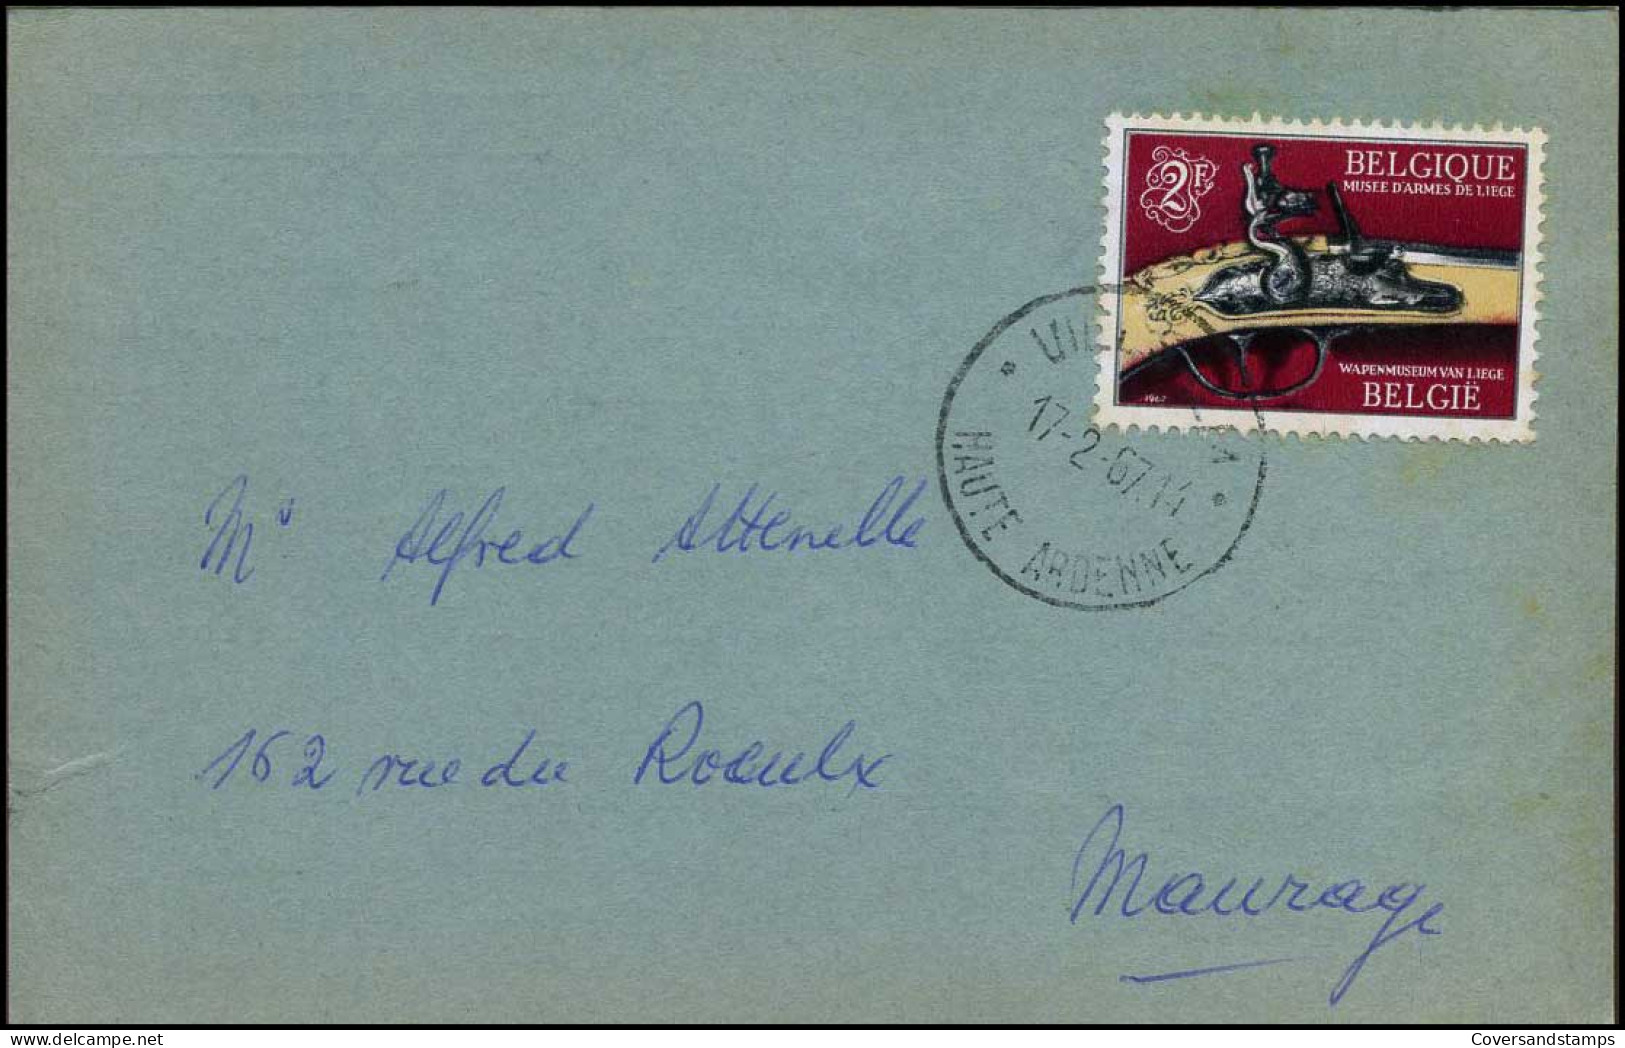 Postkaart : Van Vielsalm Naar Maurage -- "Salm Phila Club" - Briefkaarten 1951-..